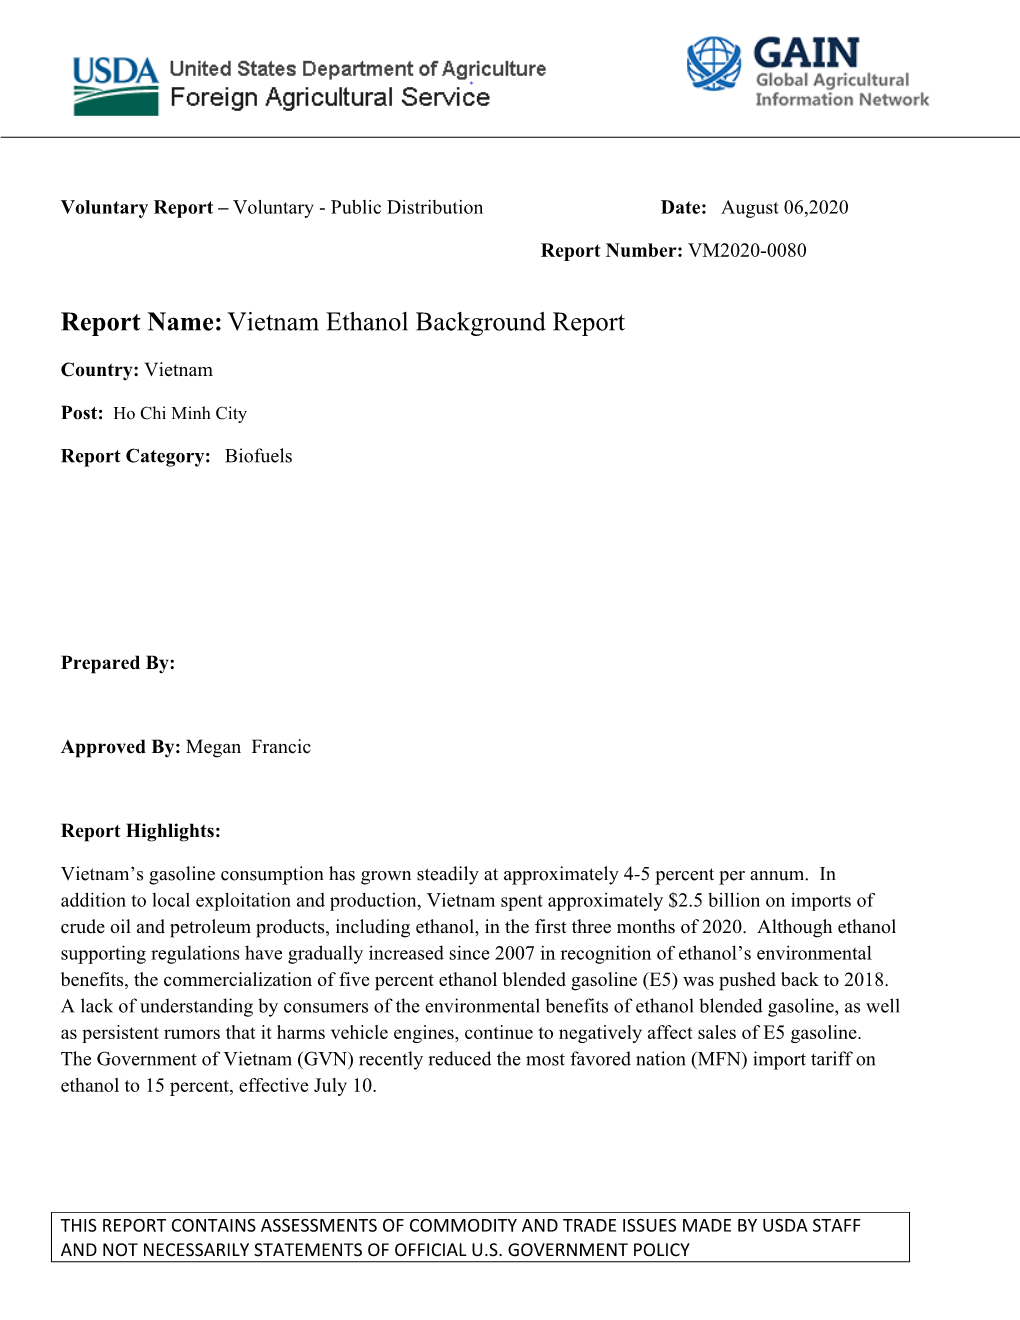 Report Name:Vietnam Ethanol Background Report